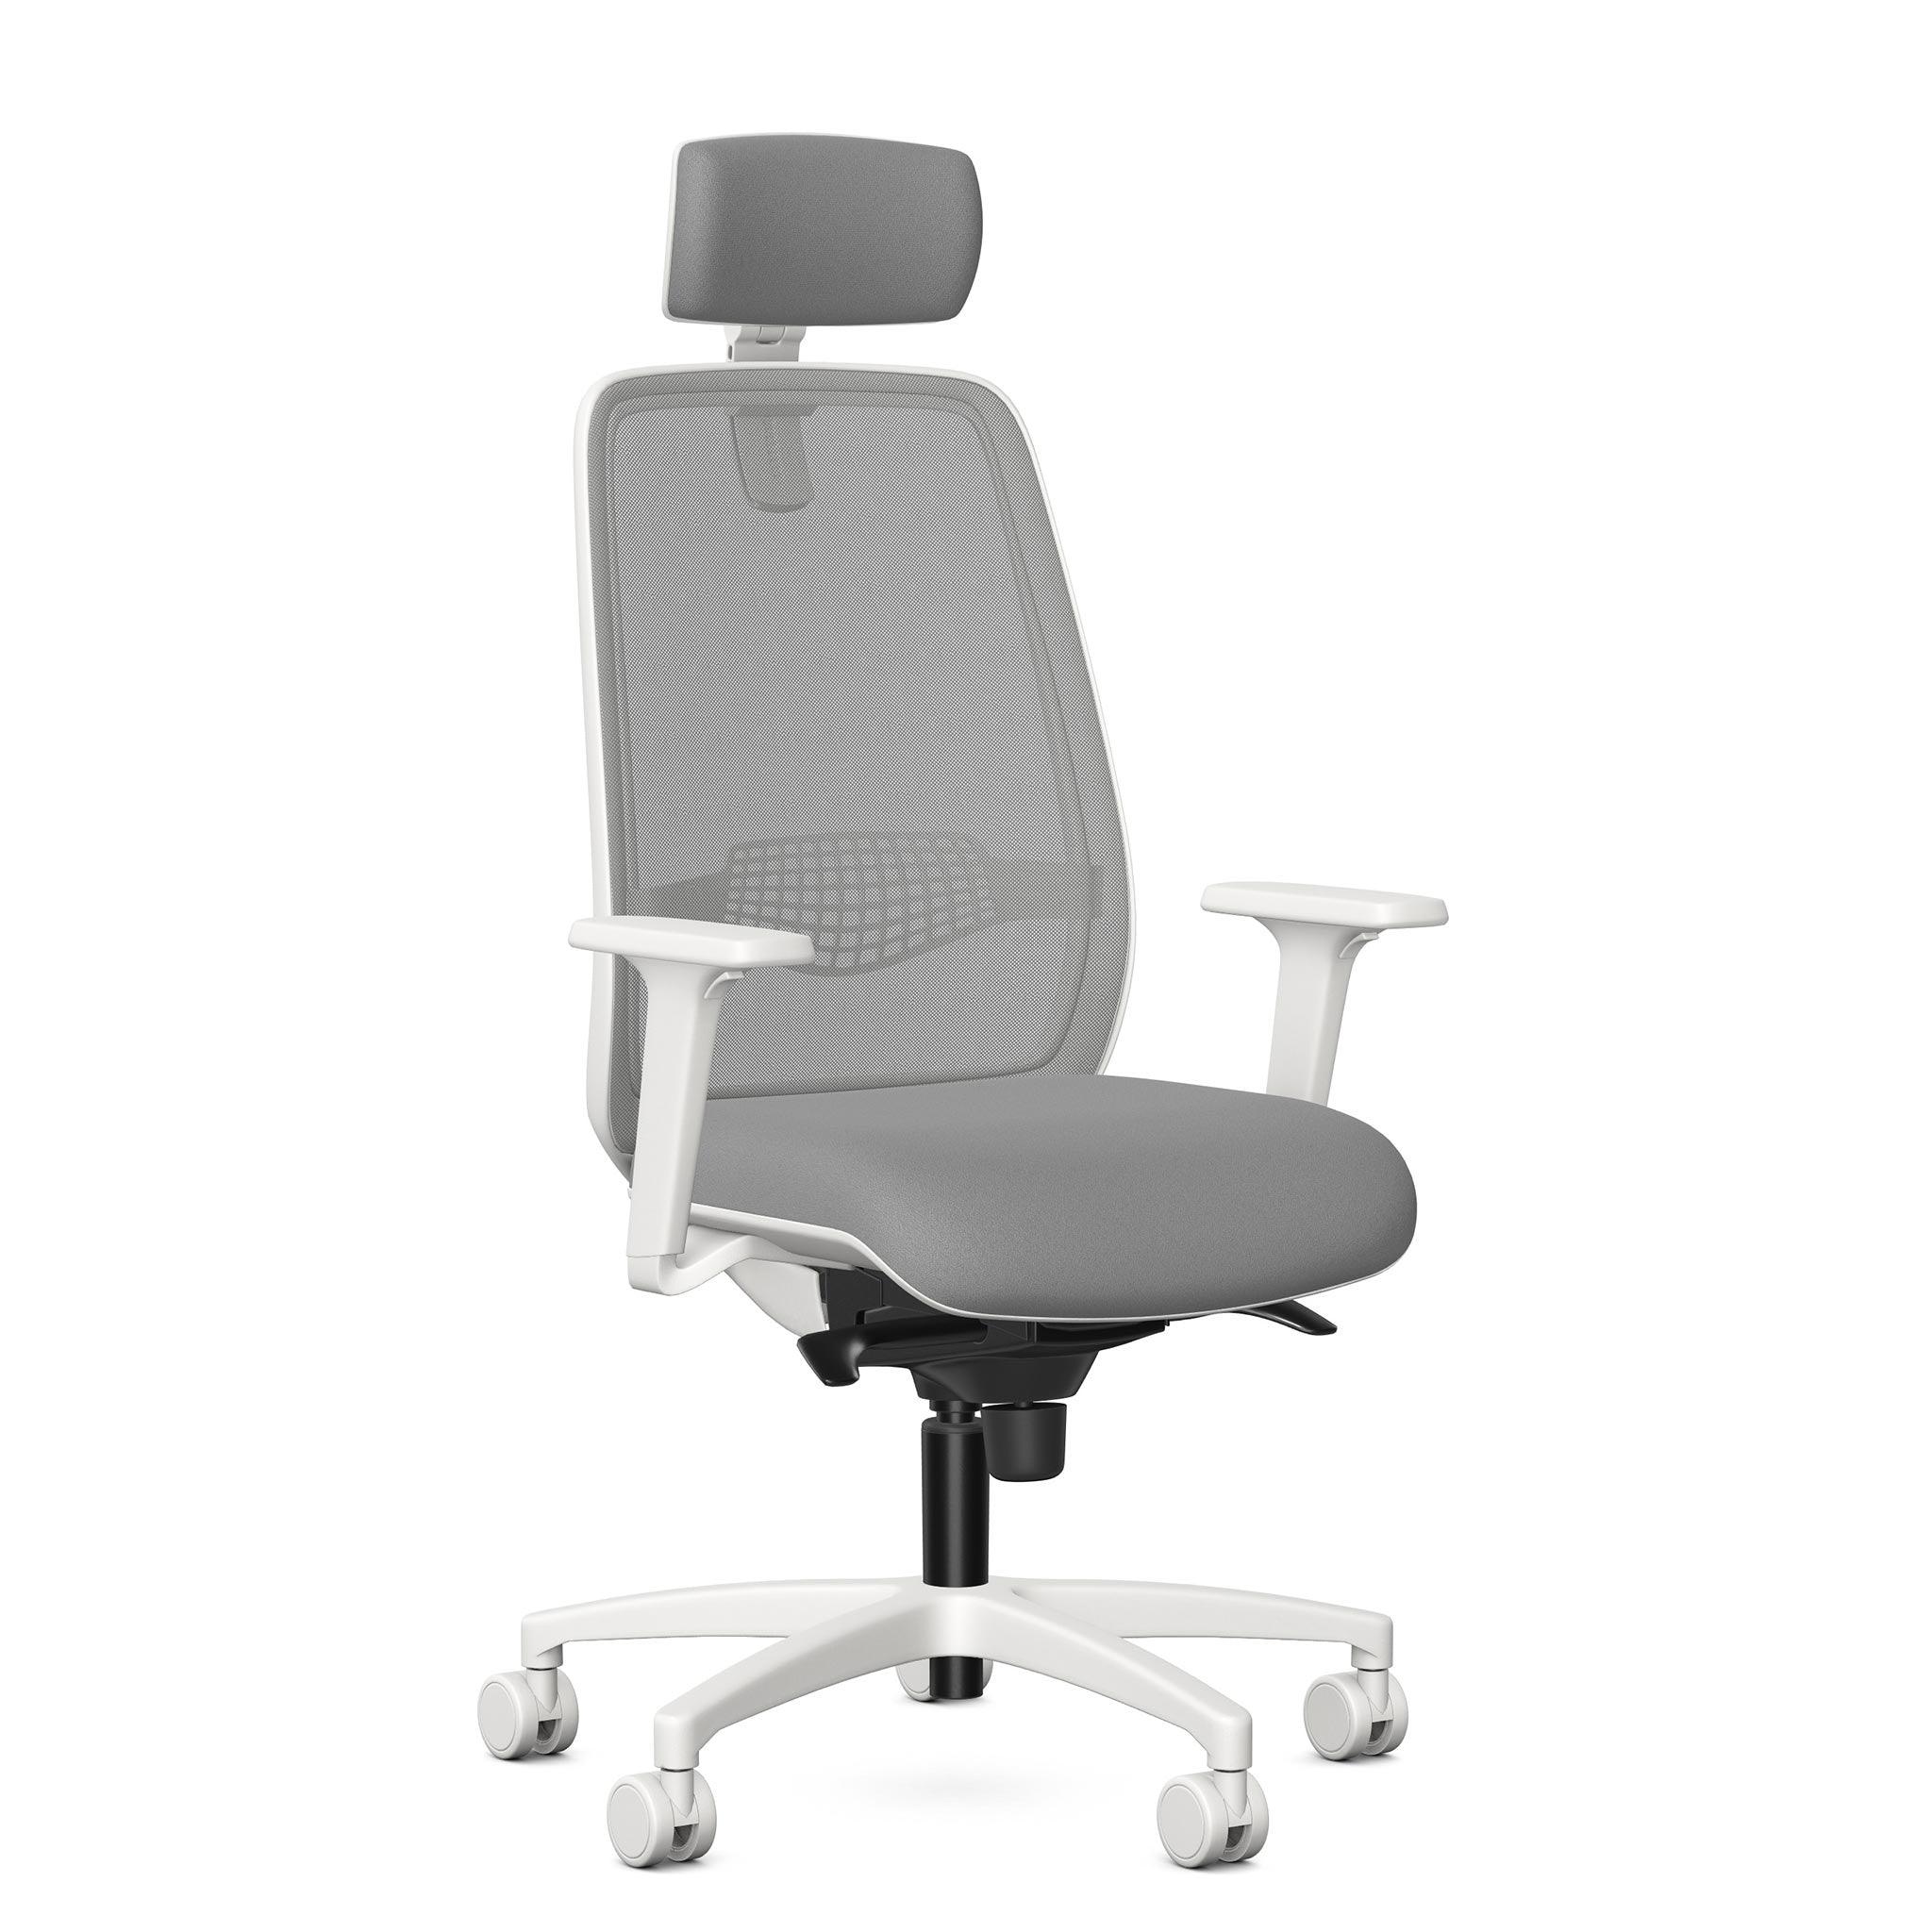 Neemo Ergonomic Office Chair - iMovR